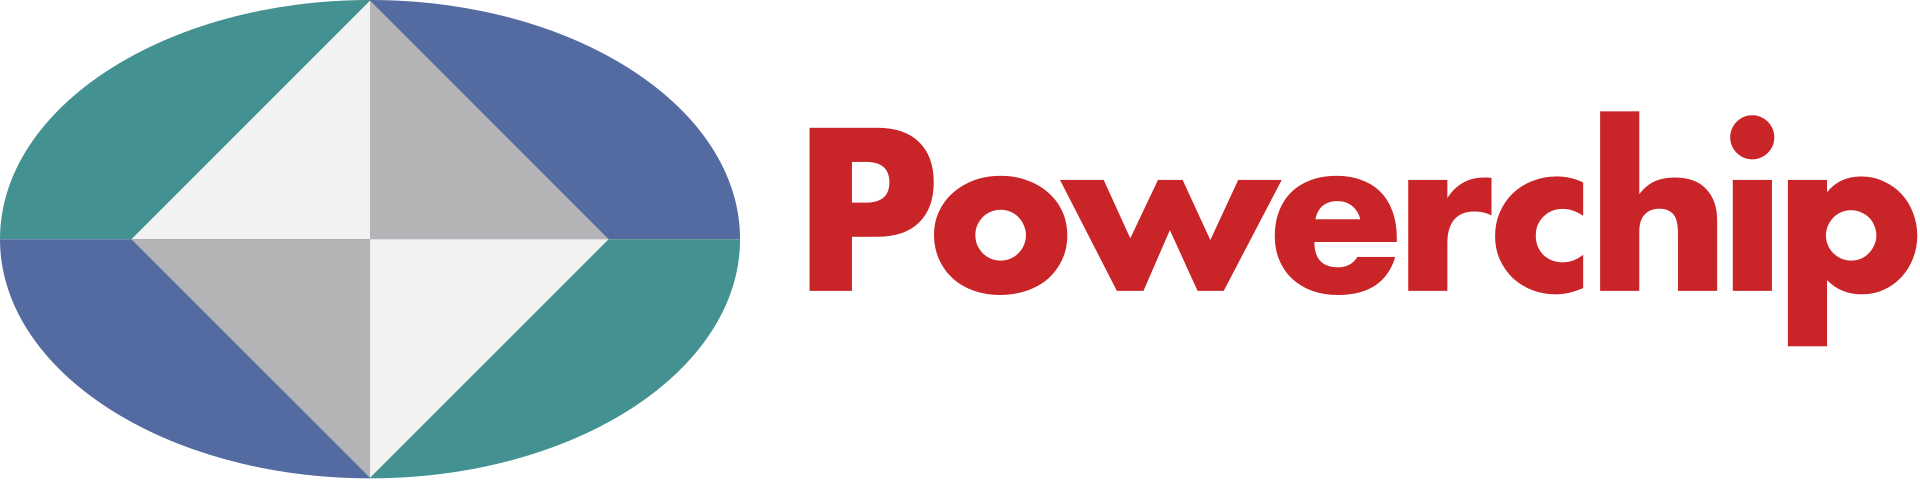 Powerchip Technology Corporation - Powerchip Semiconductor Corp